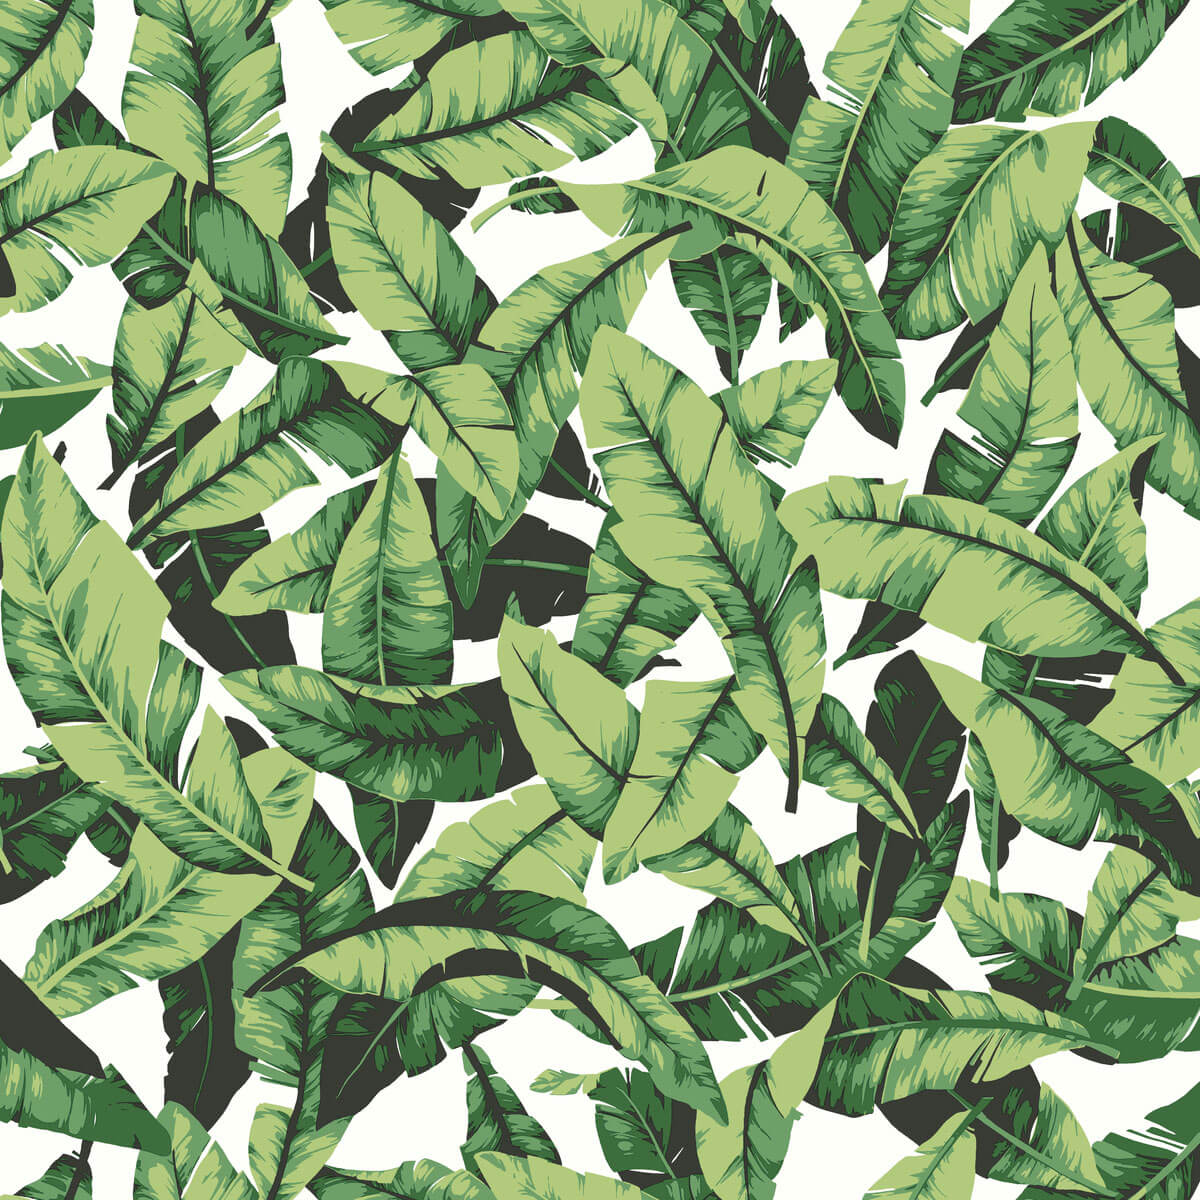 Palm Leaves Peel & Stick Wallpaper - Green